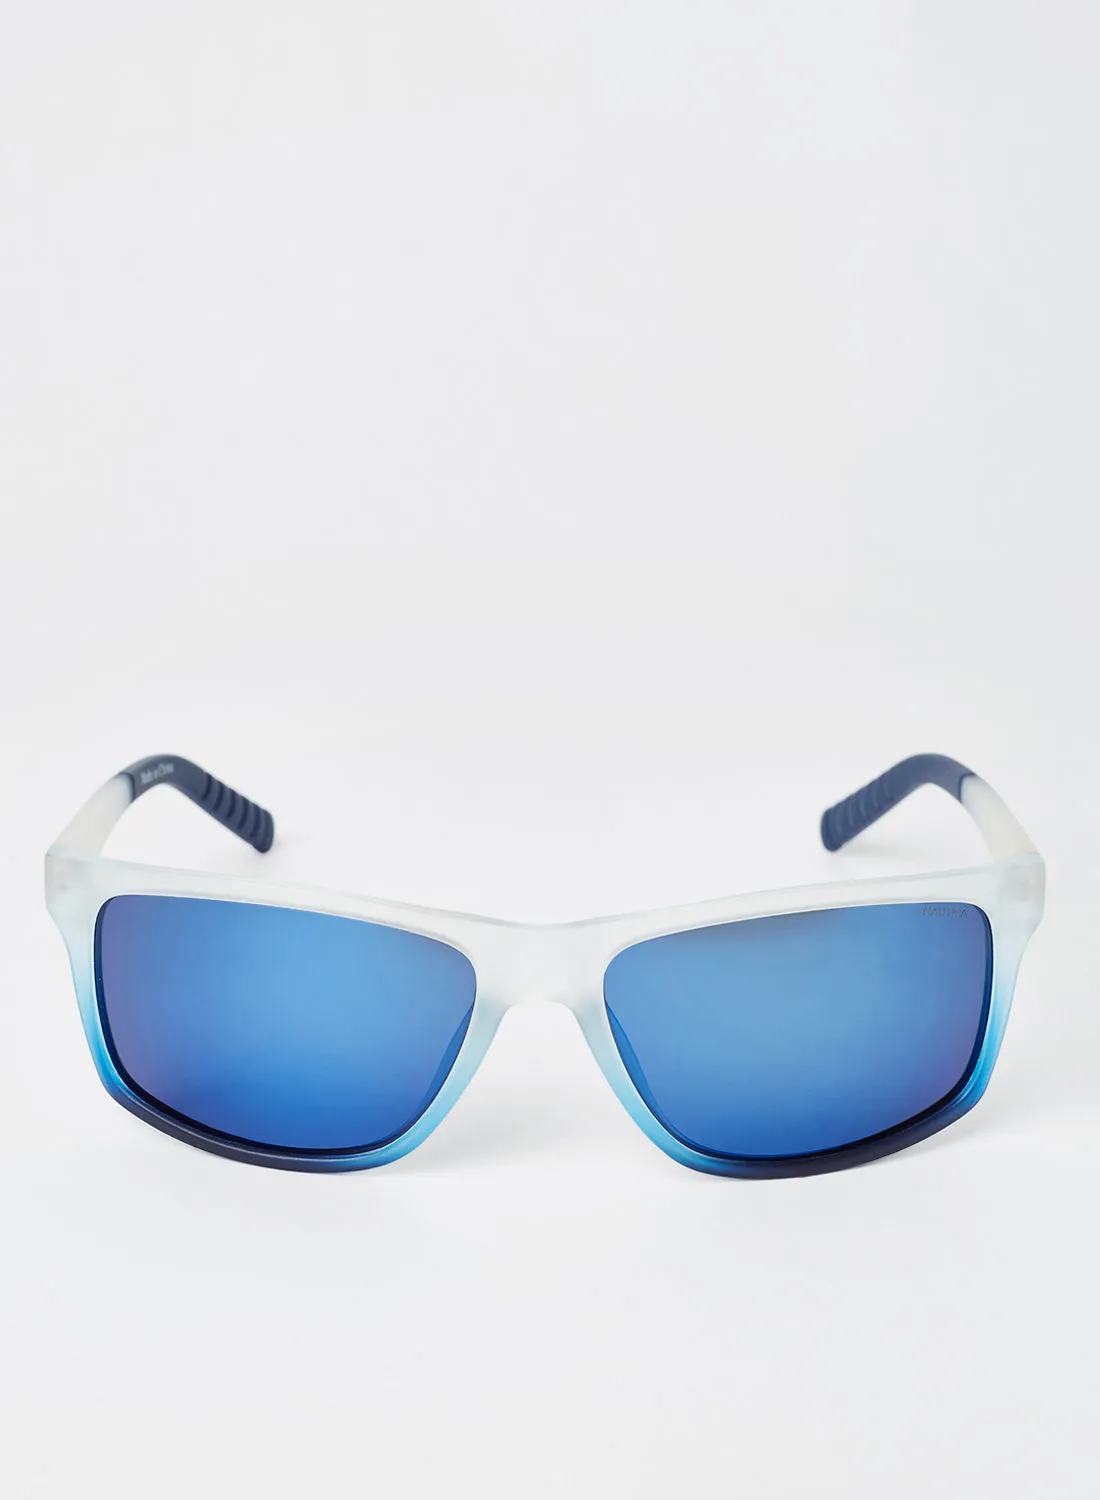 NAUTICA Men's Full Rim Injected Rectangle Sunglasses - Lens Size: 62 mm